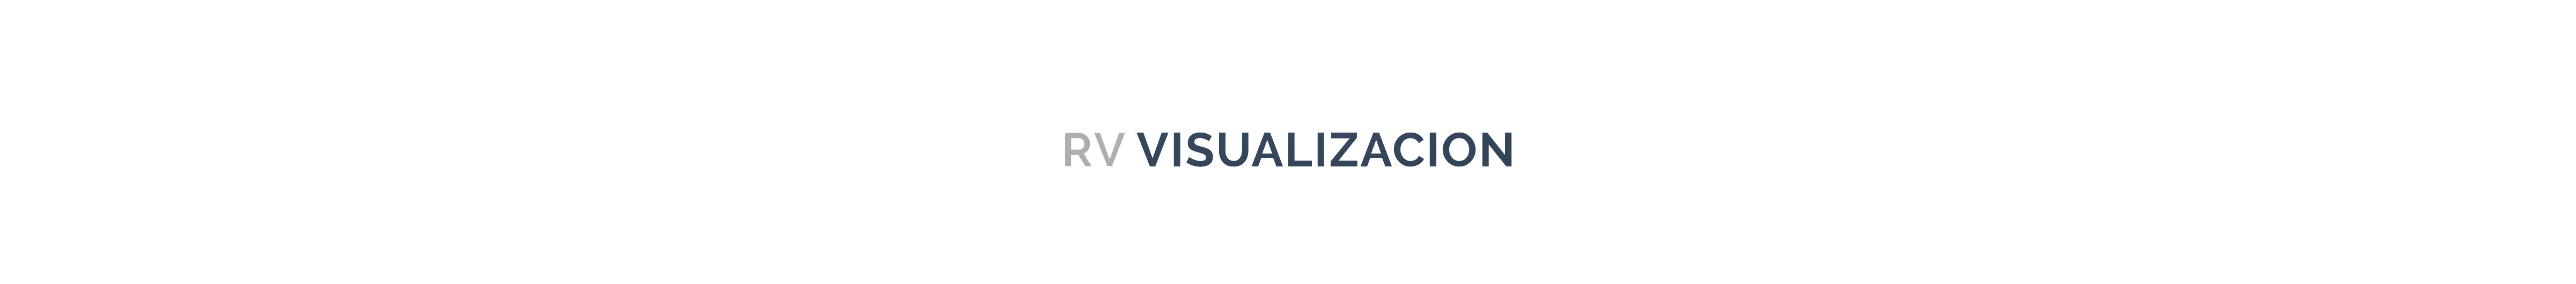 RV Visualización's profile banner